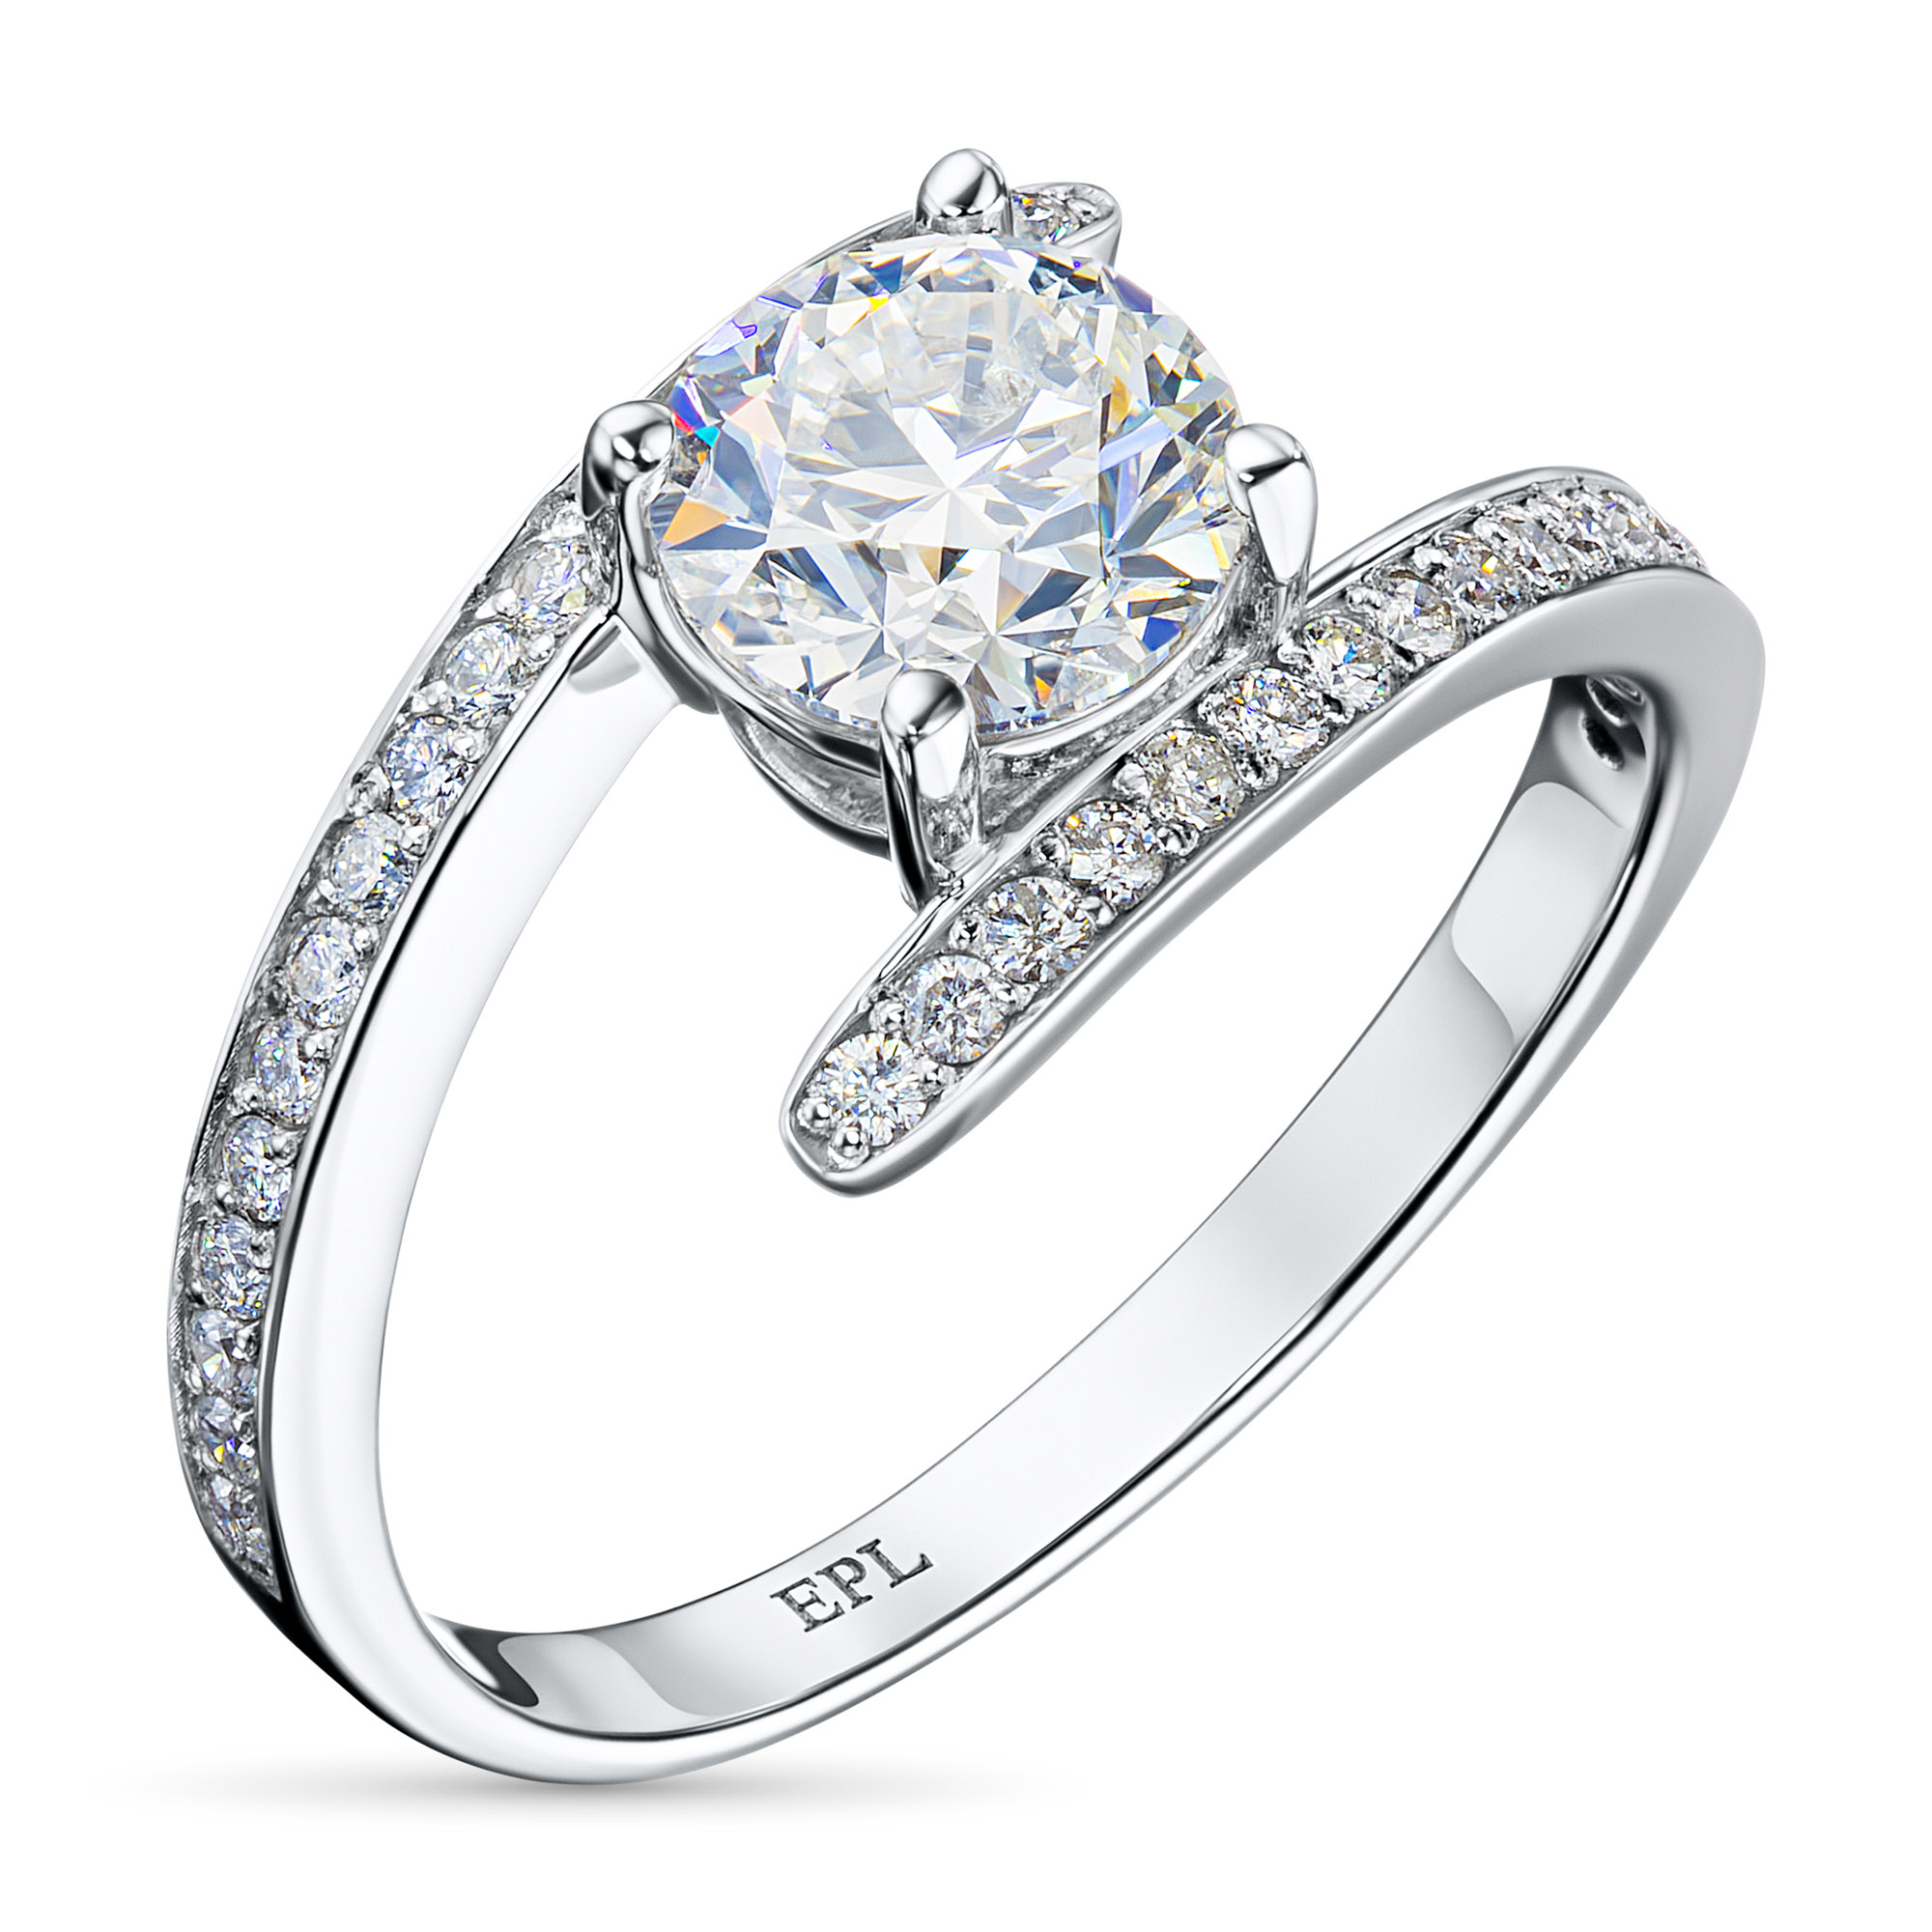 Санлайт якутские. Эпл Даймонд кольцо с бриллиантом. Помолвочное кольцо якутские бриллианты. Кольцо из белого золота с бриллиантом Санлайт бриллиантом. Санлайт кольцо с бриллиантом белое золото.